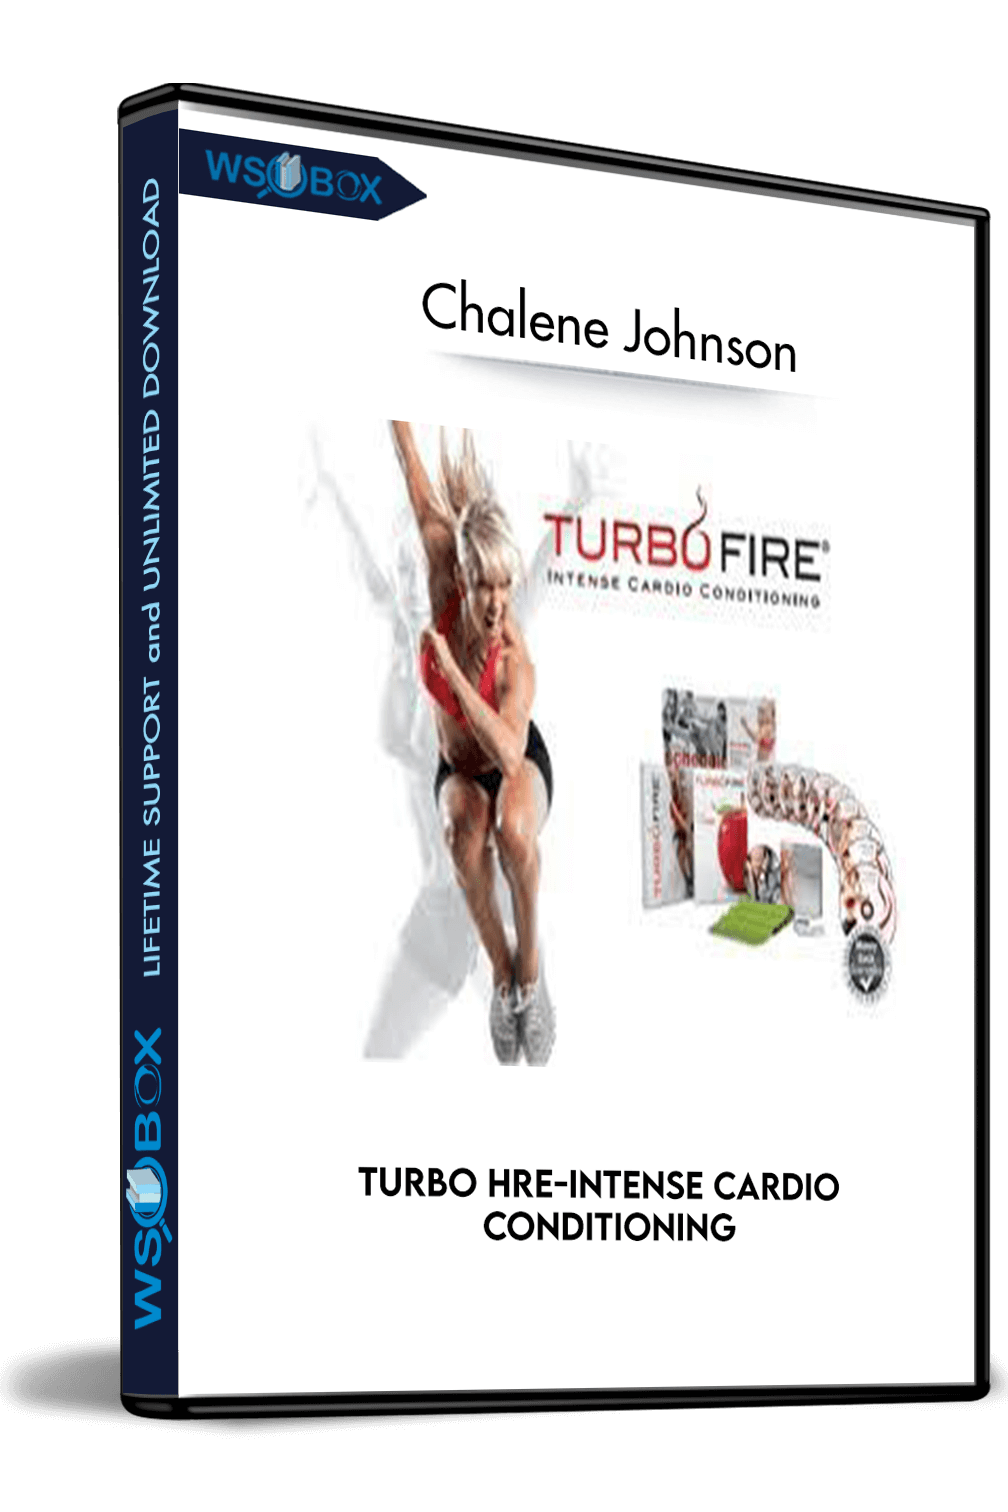 turbo-hre-intense-cardio-conditioning-chalene-johnson